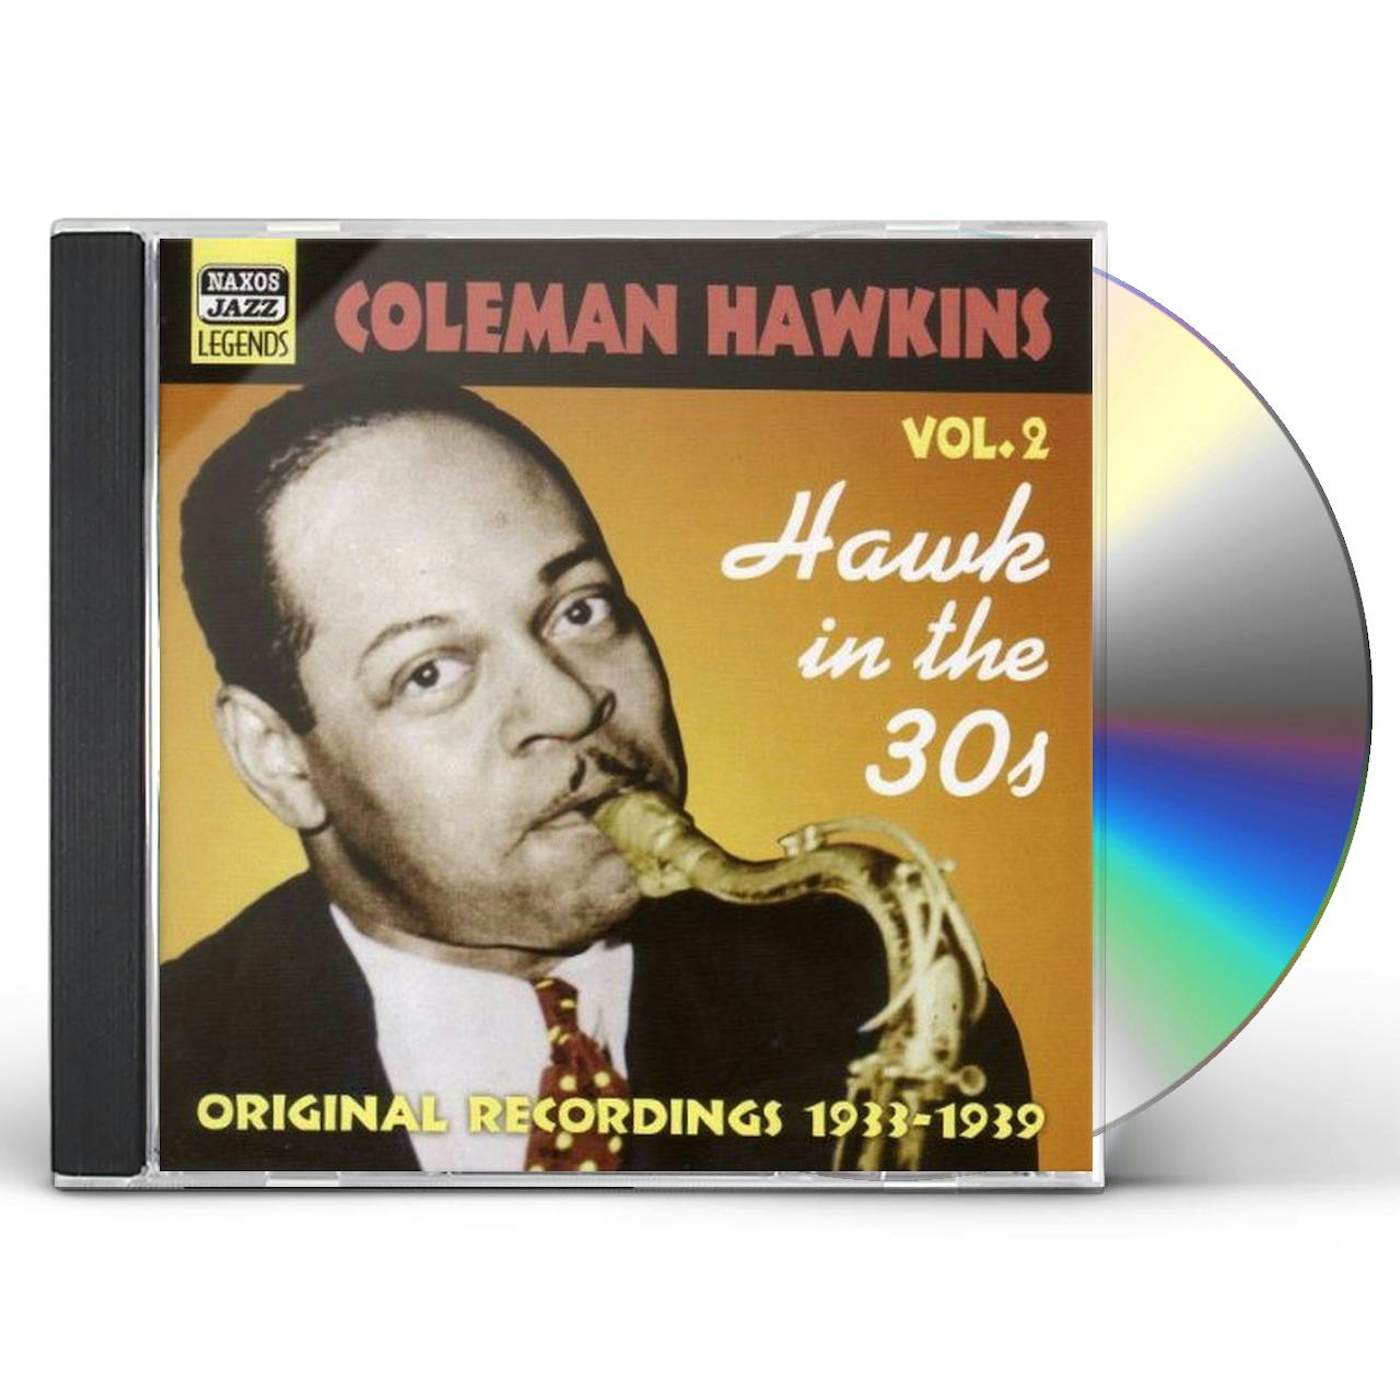 Coleman Hawkins VOL. 2-HAWK IN THE 30'S CD